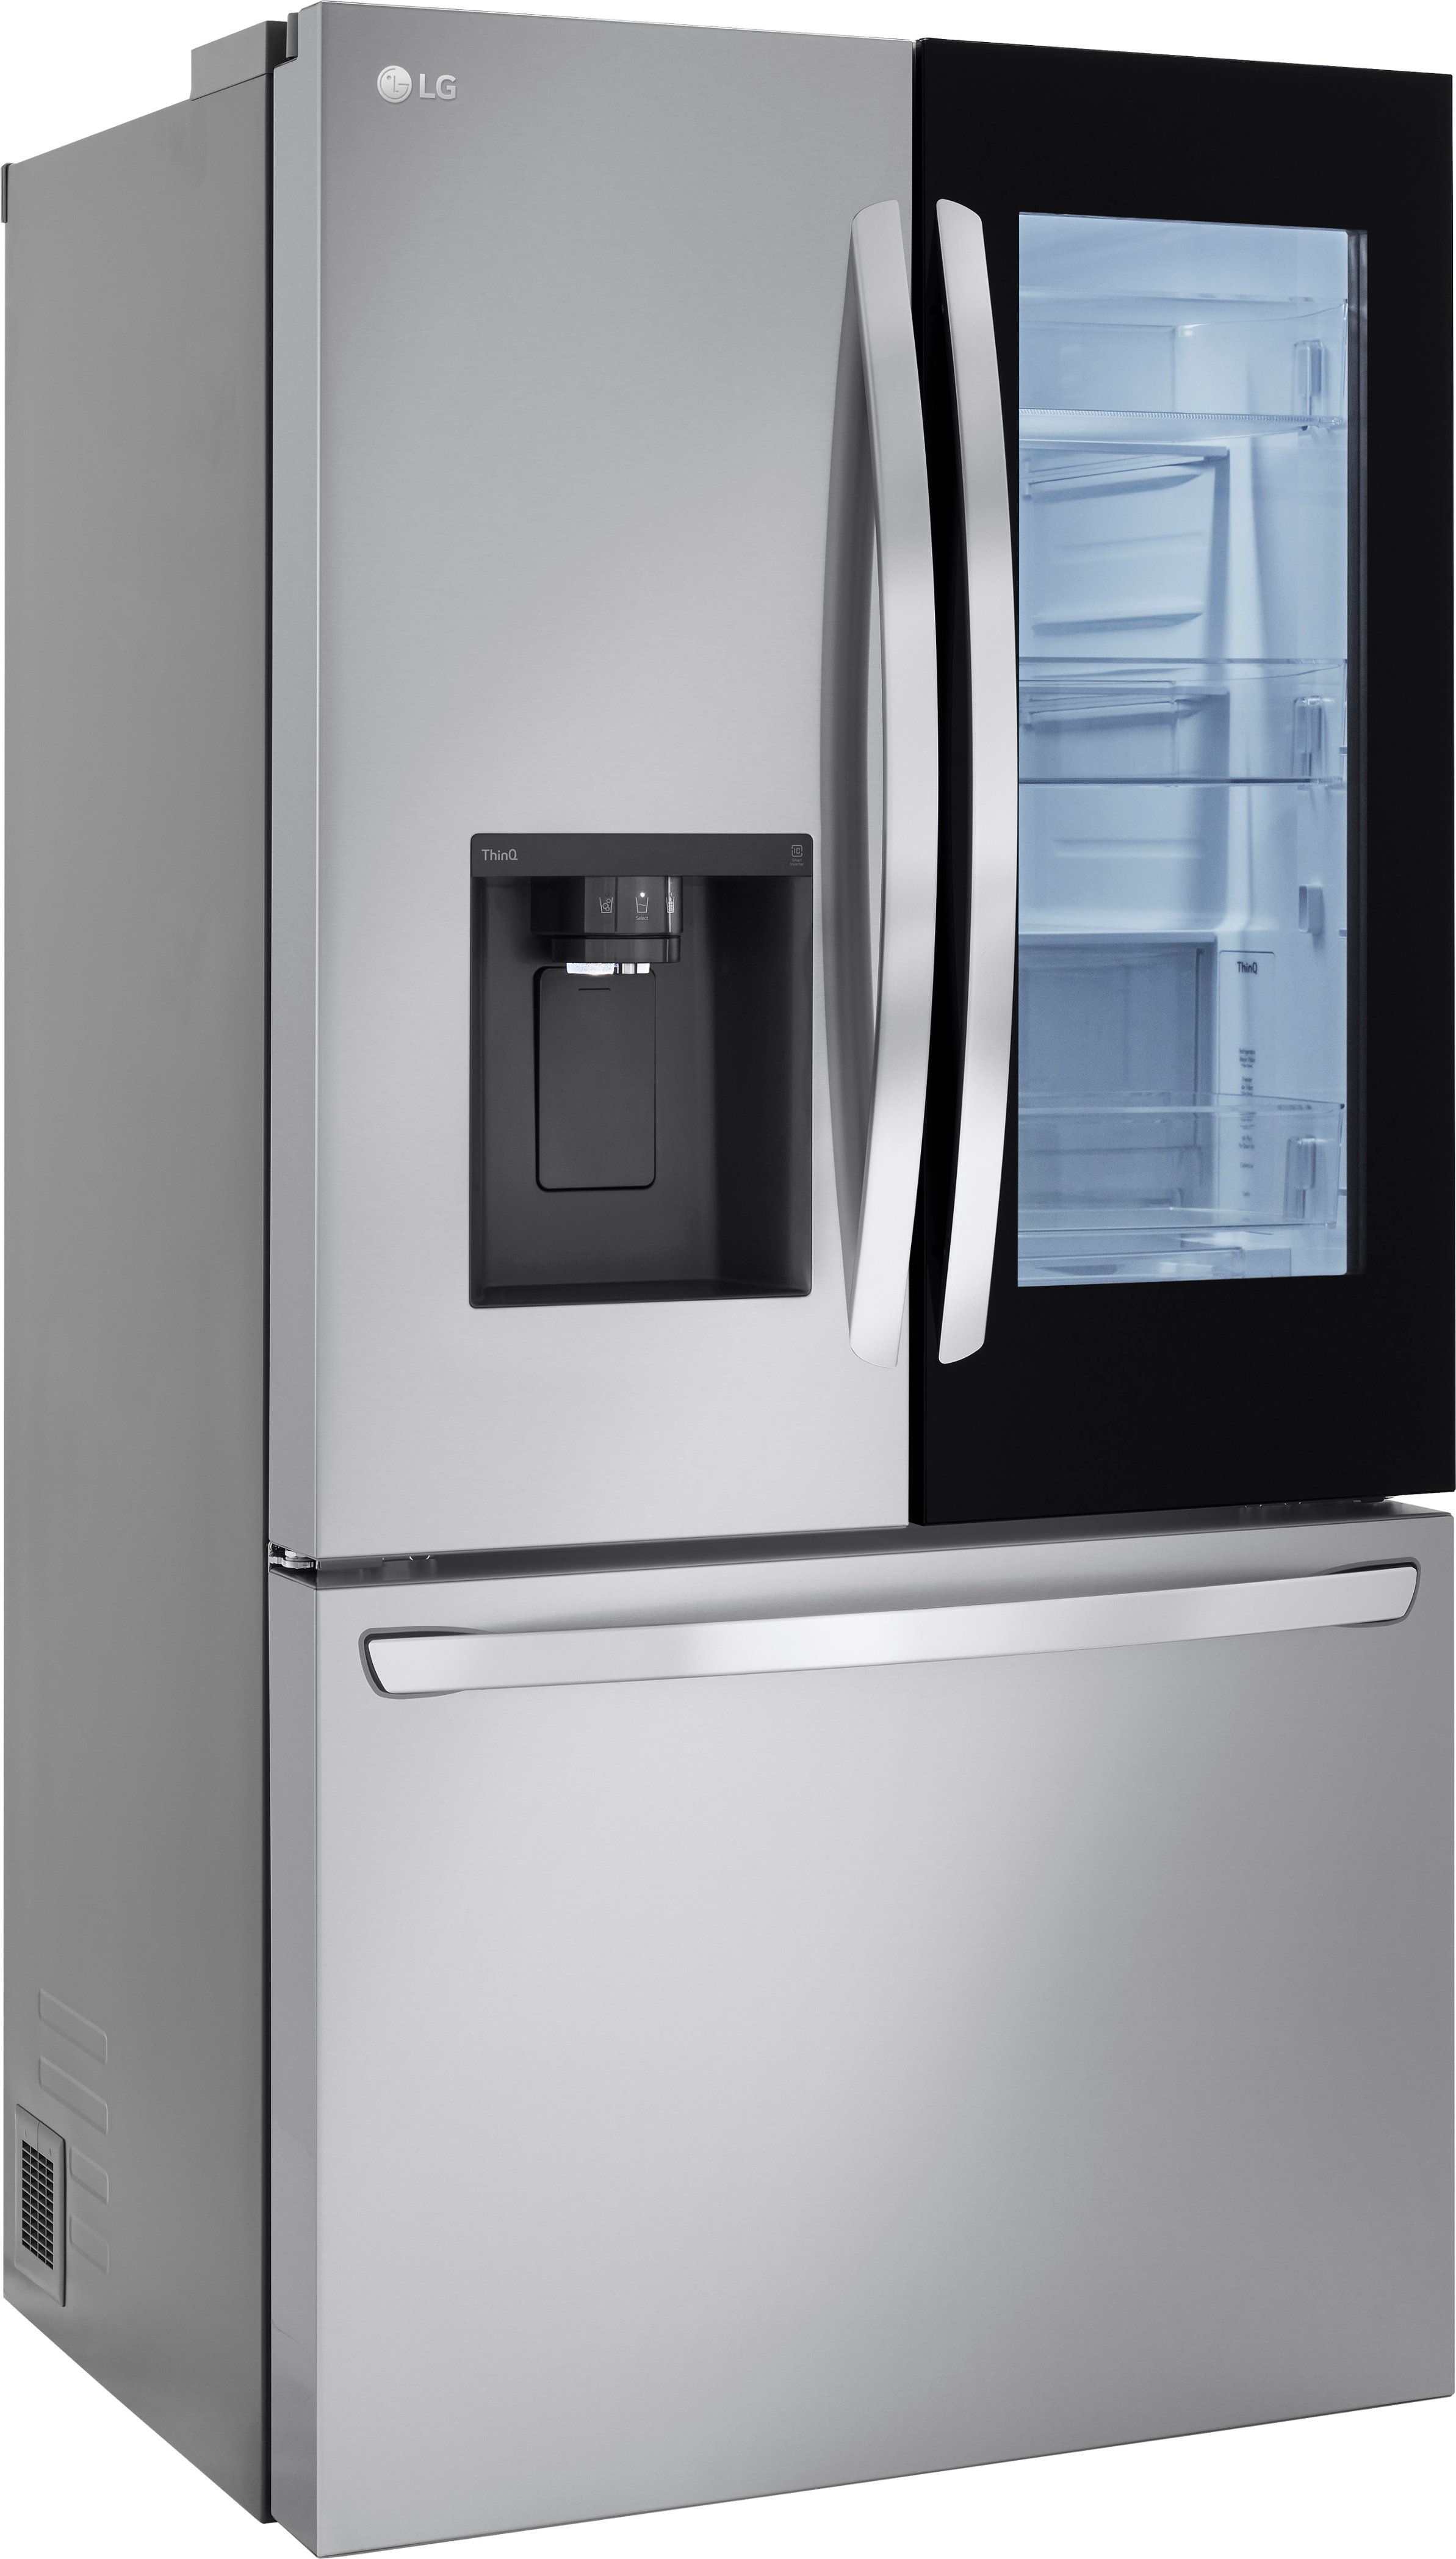 Réfrigérateur Samsung single door - le Showroom.TV